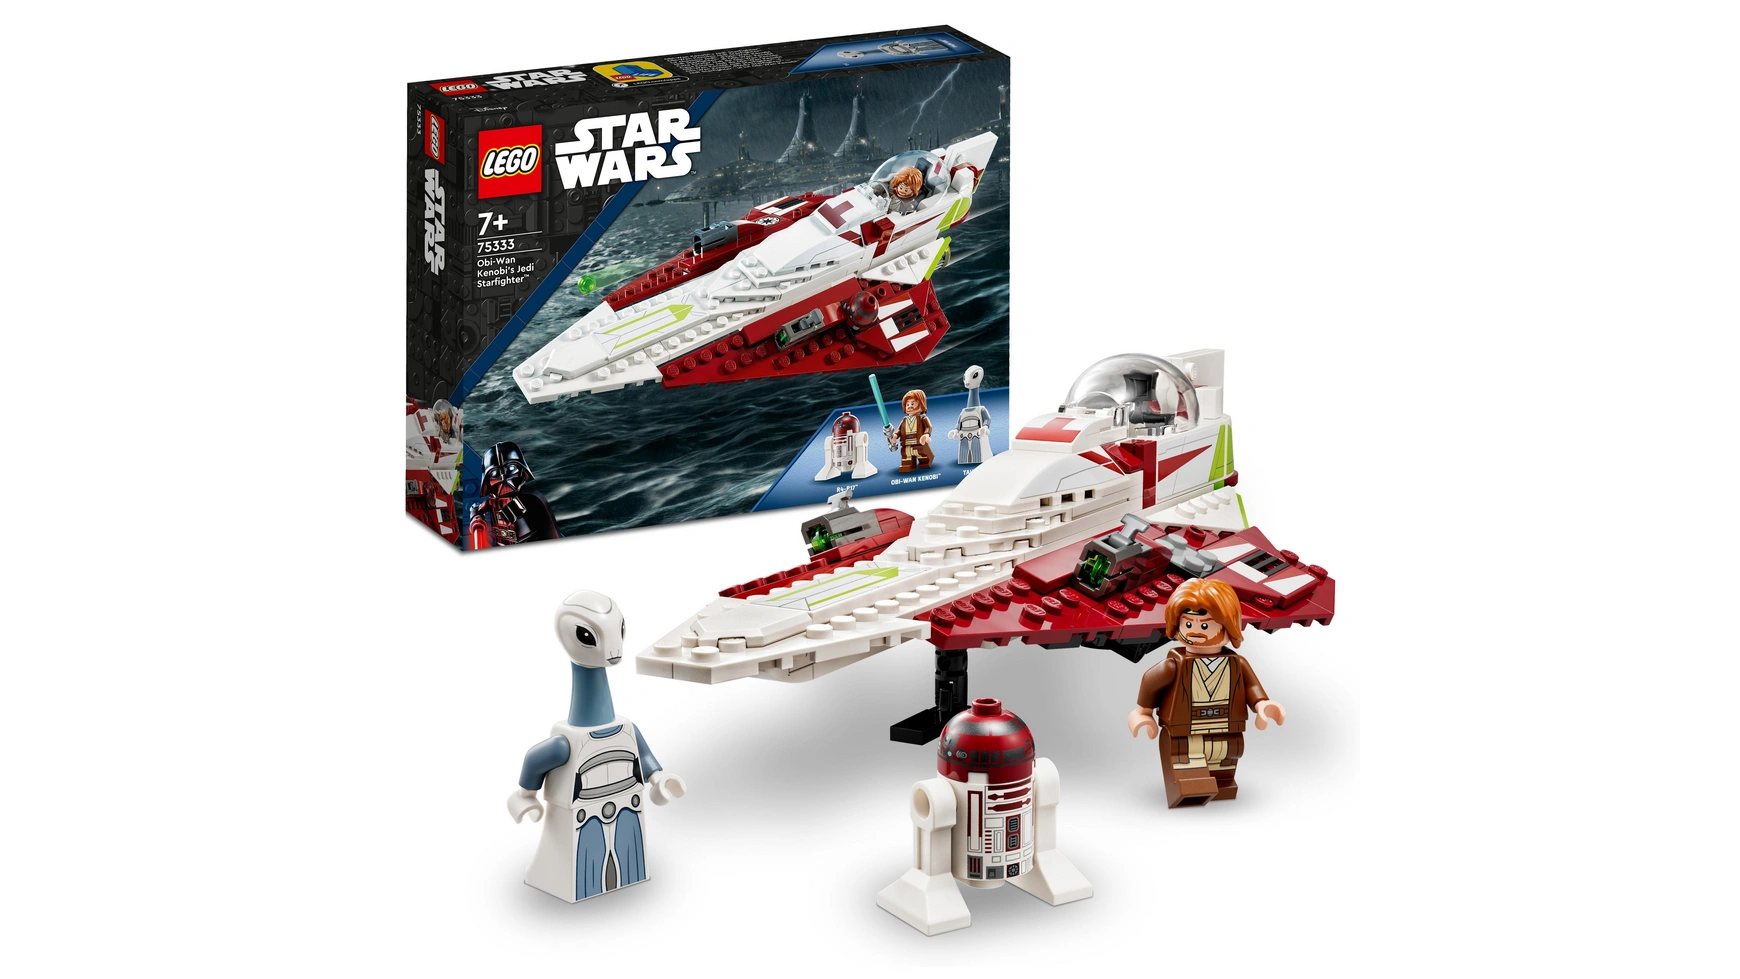 Lego Star Wars Набор Звездный истребитель джедая Оби-Вана Кеноби конструктор km66037 kaminoan din djarin grogu фигурка оби вана кеноби